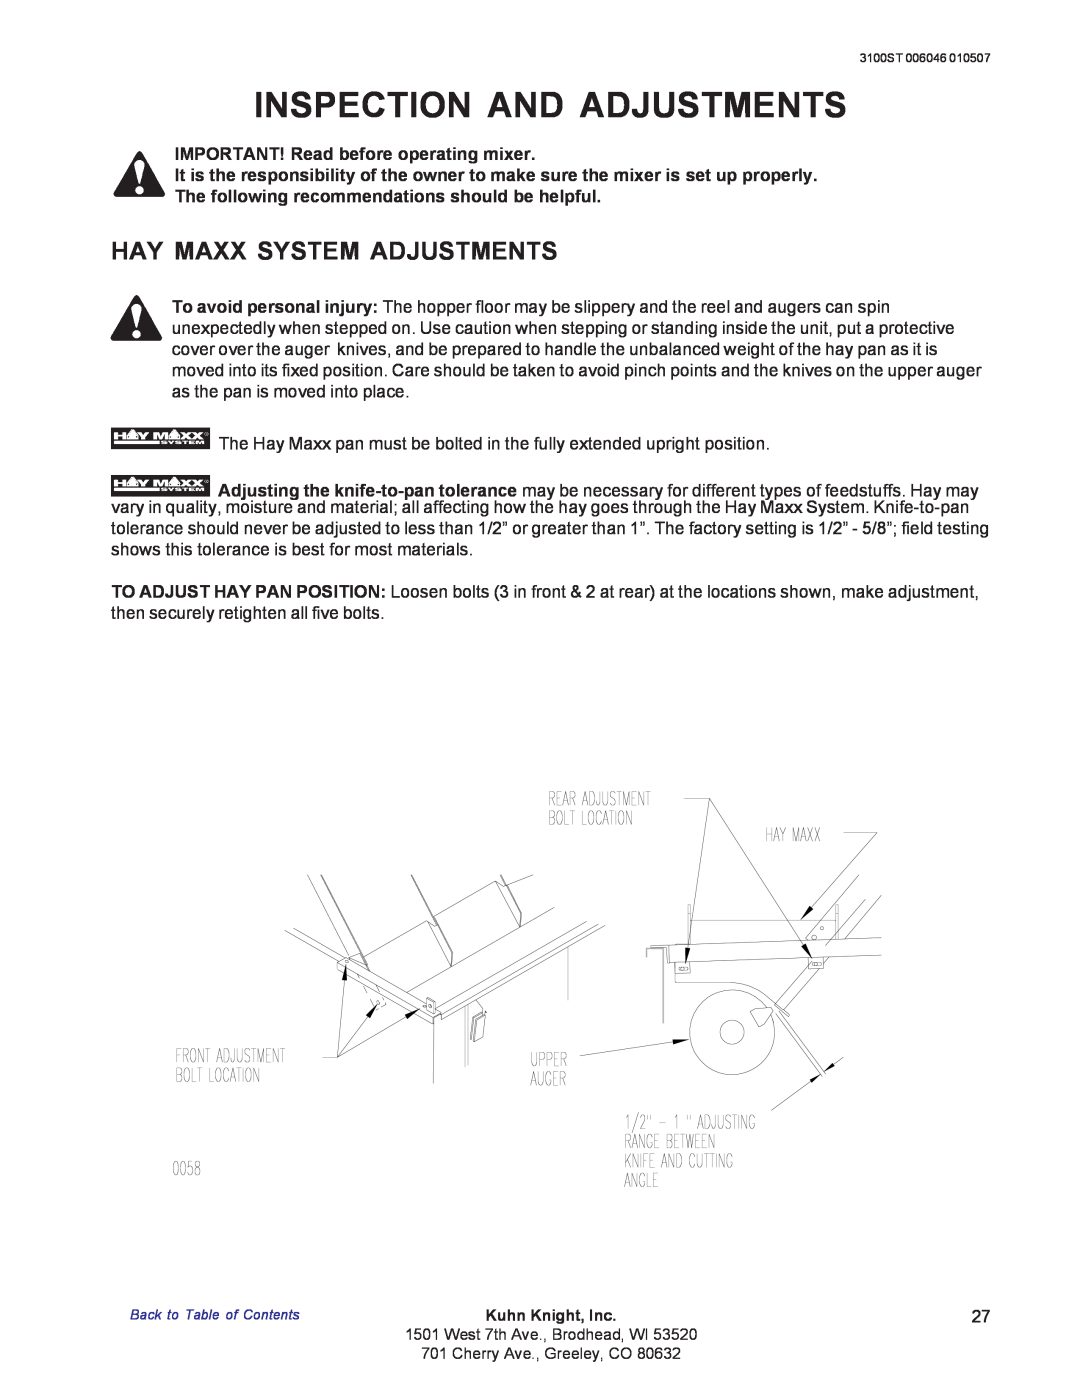 Kuhn Rikon 3100 Hay Maxx System Adjustments, Inspection And Adjustments, IMPORTANT! Read before operating mixer 